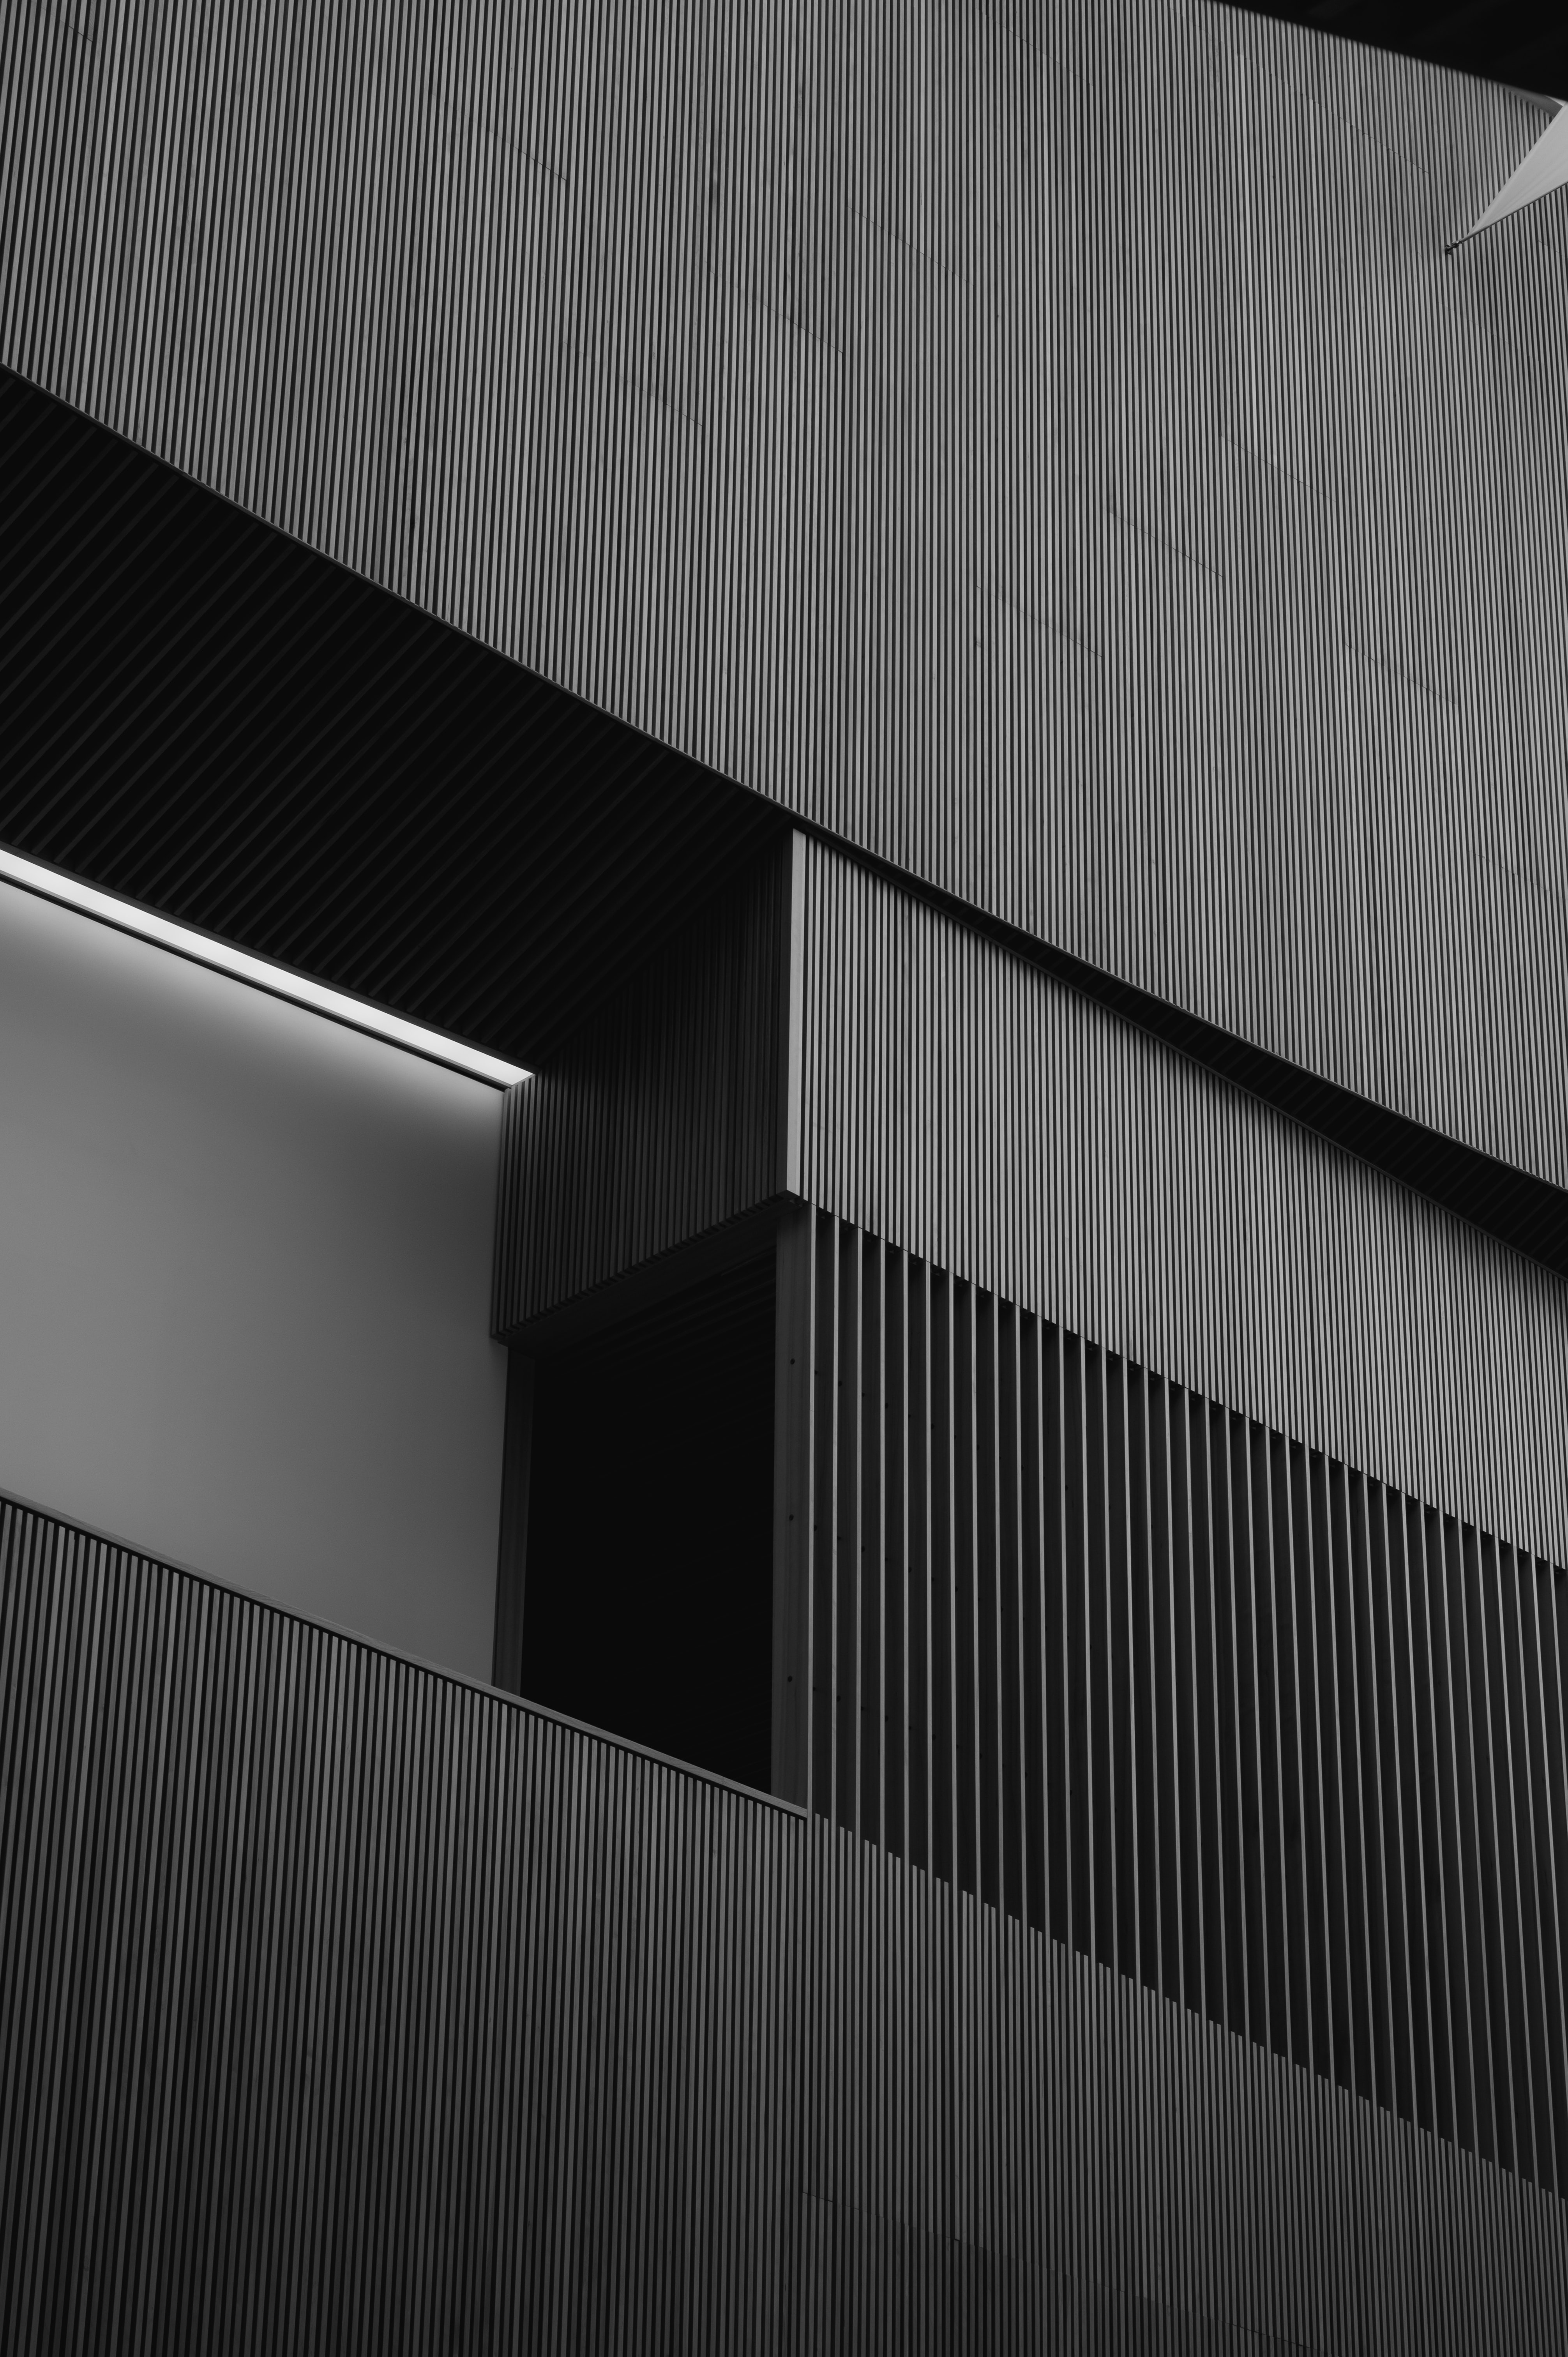 black and white, architecture, building, miscellanea, miscellaneous, bw, chb, stripes, streaks